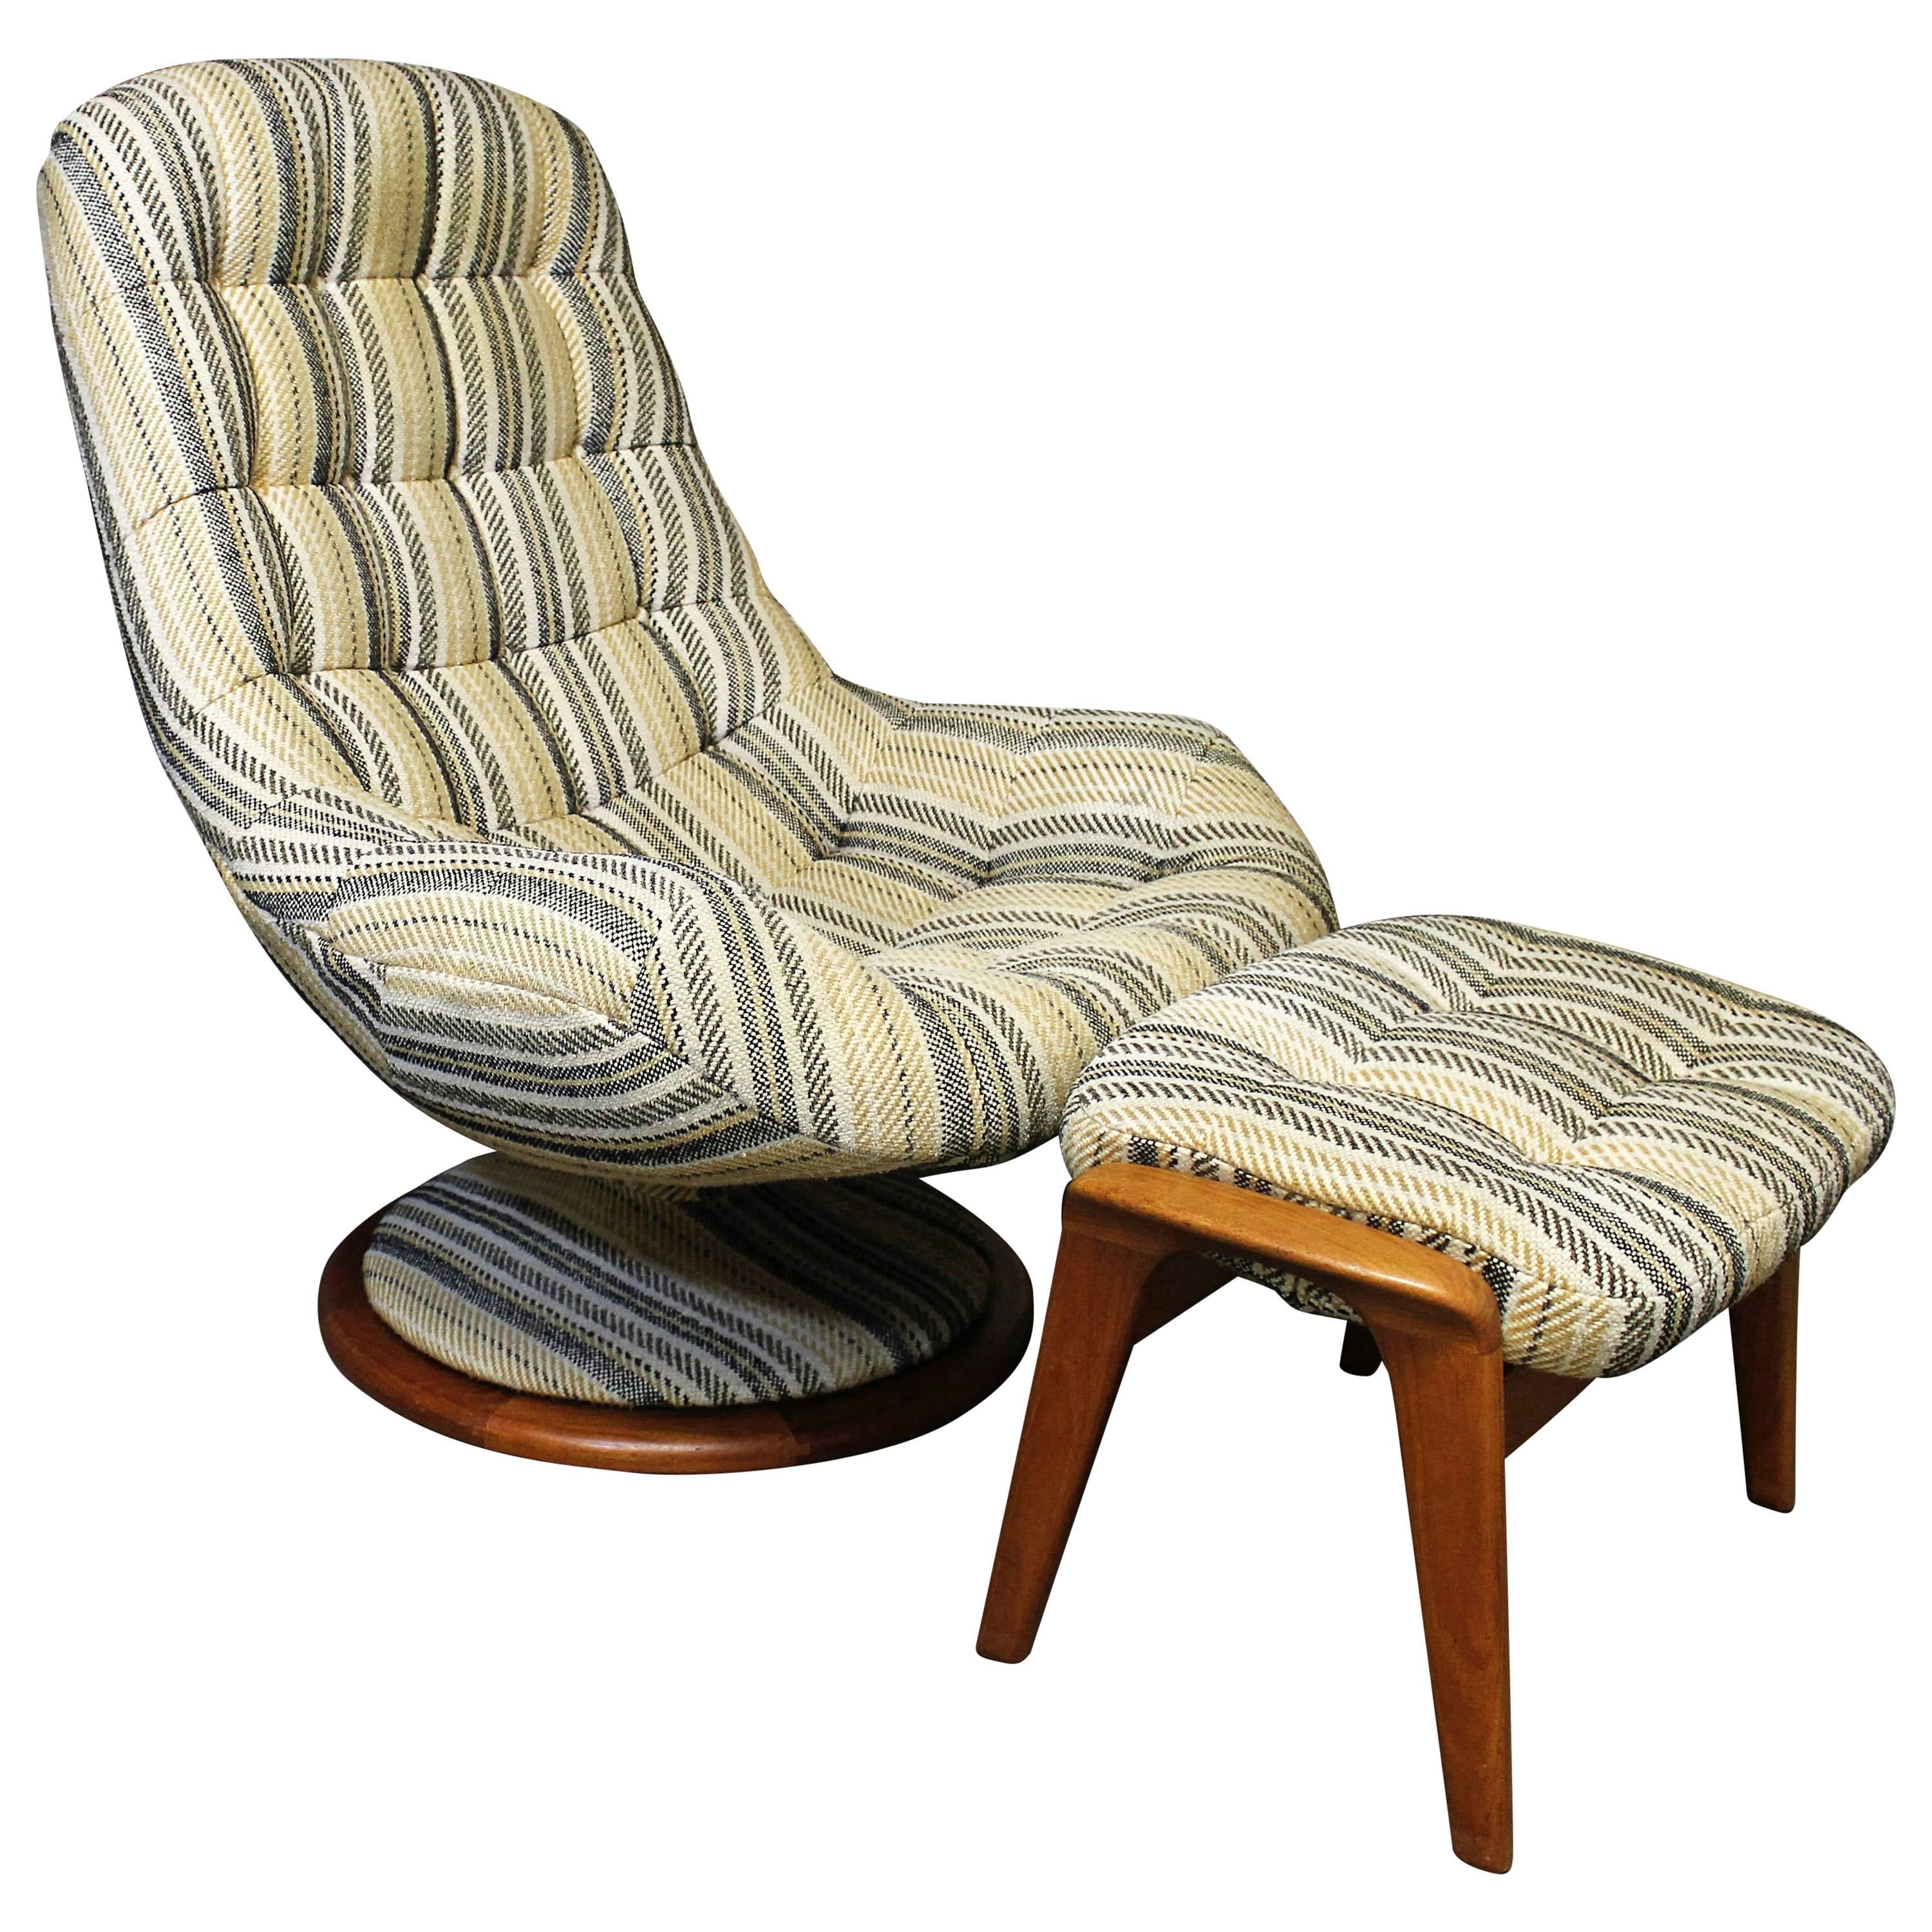 R. Huber Danish Modern Style Teak Swivel Lounge Chair and Ottoman